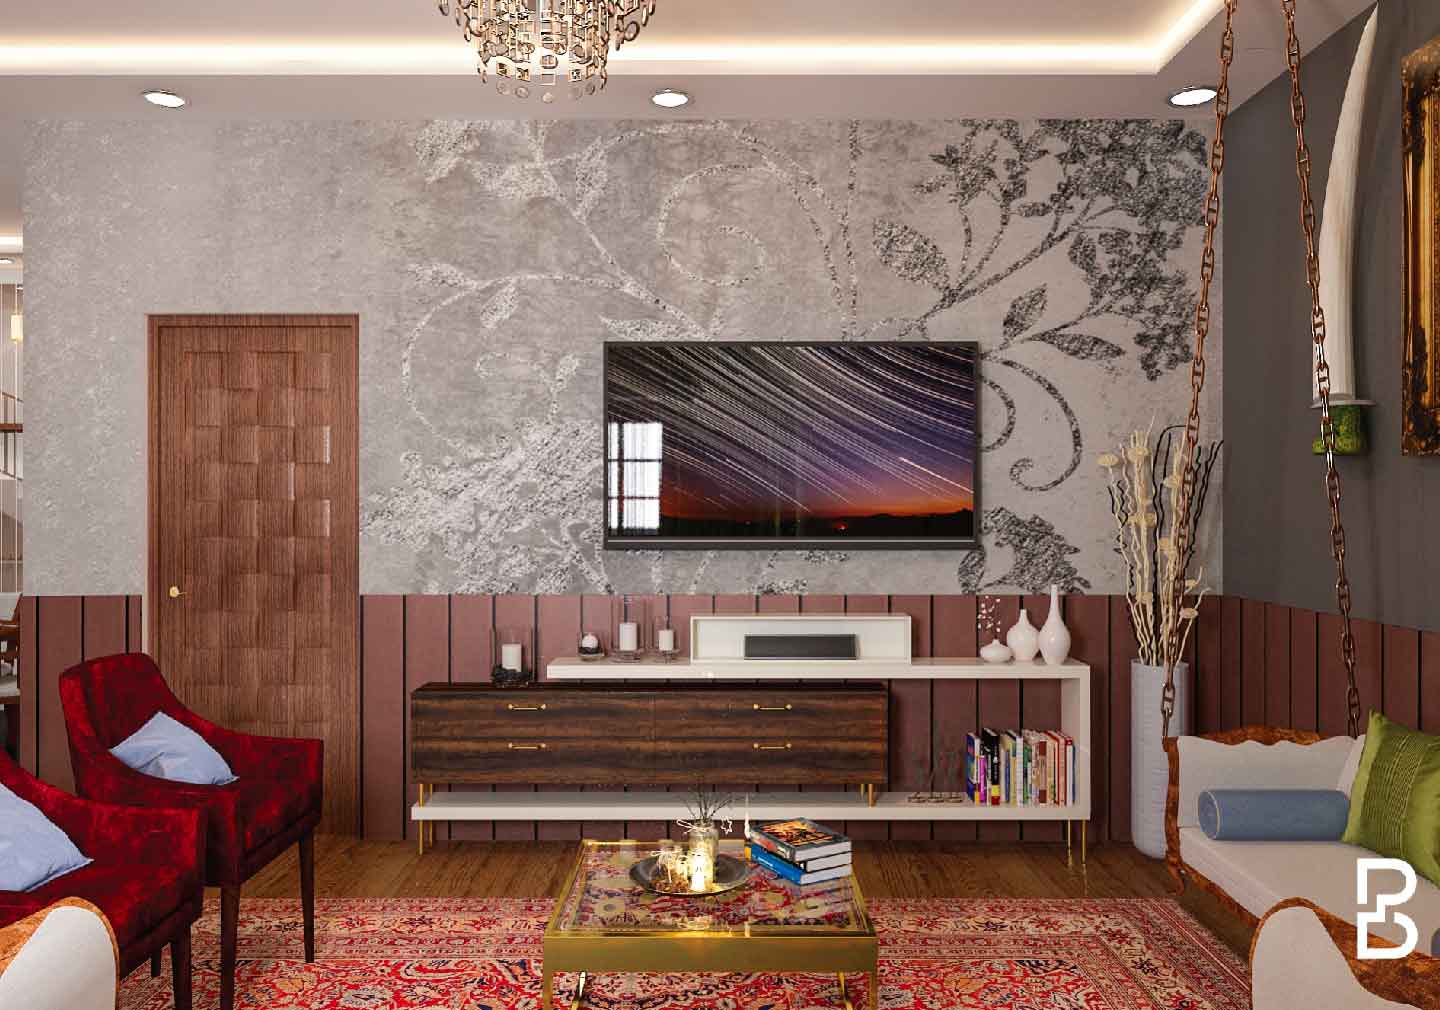 The Walls - Living Room Interior Design